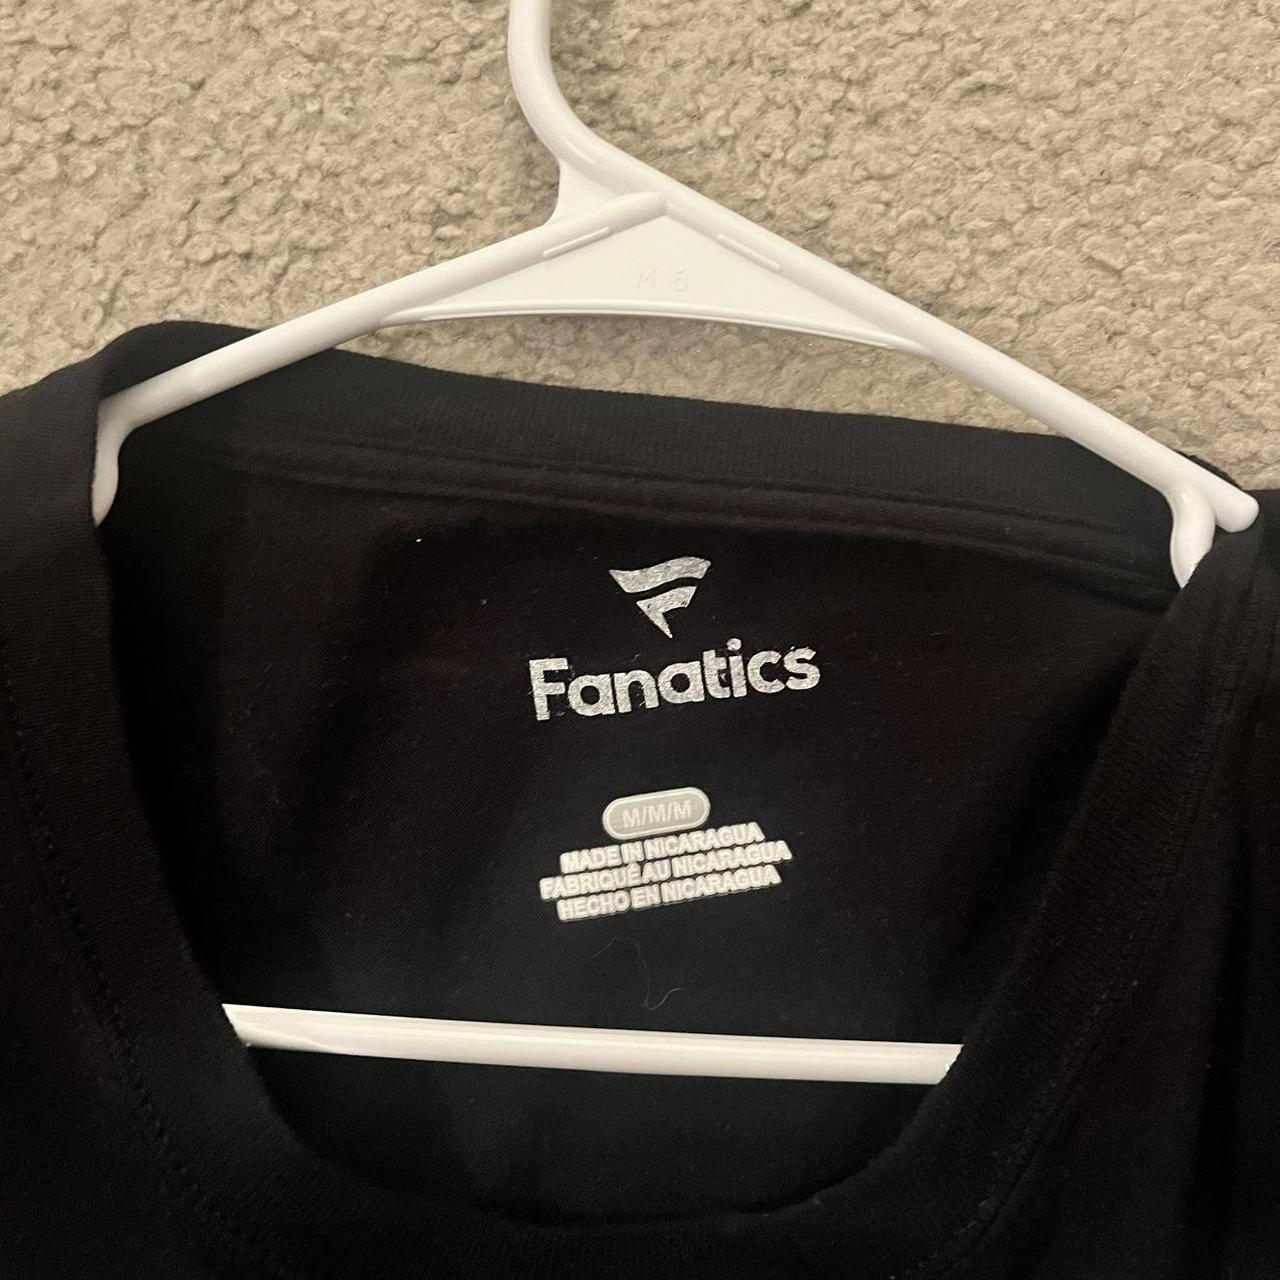 Fanatics Women's T-Shirt - Black - M